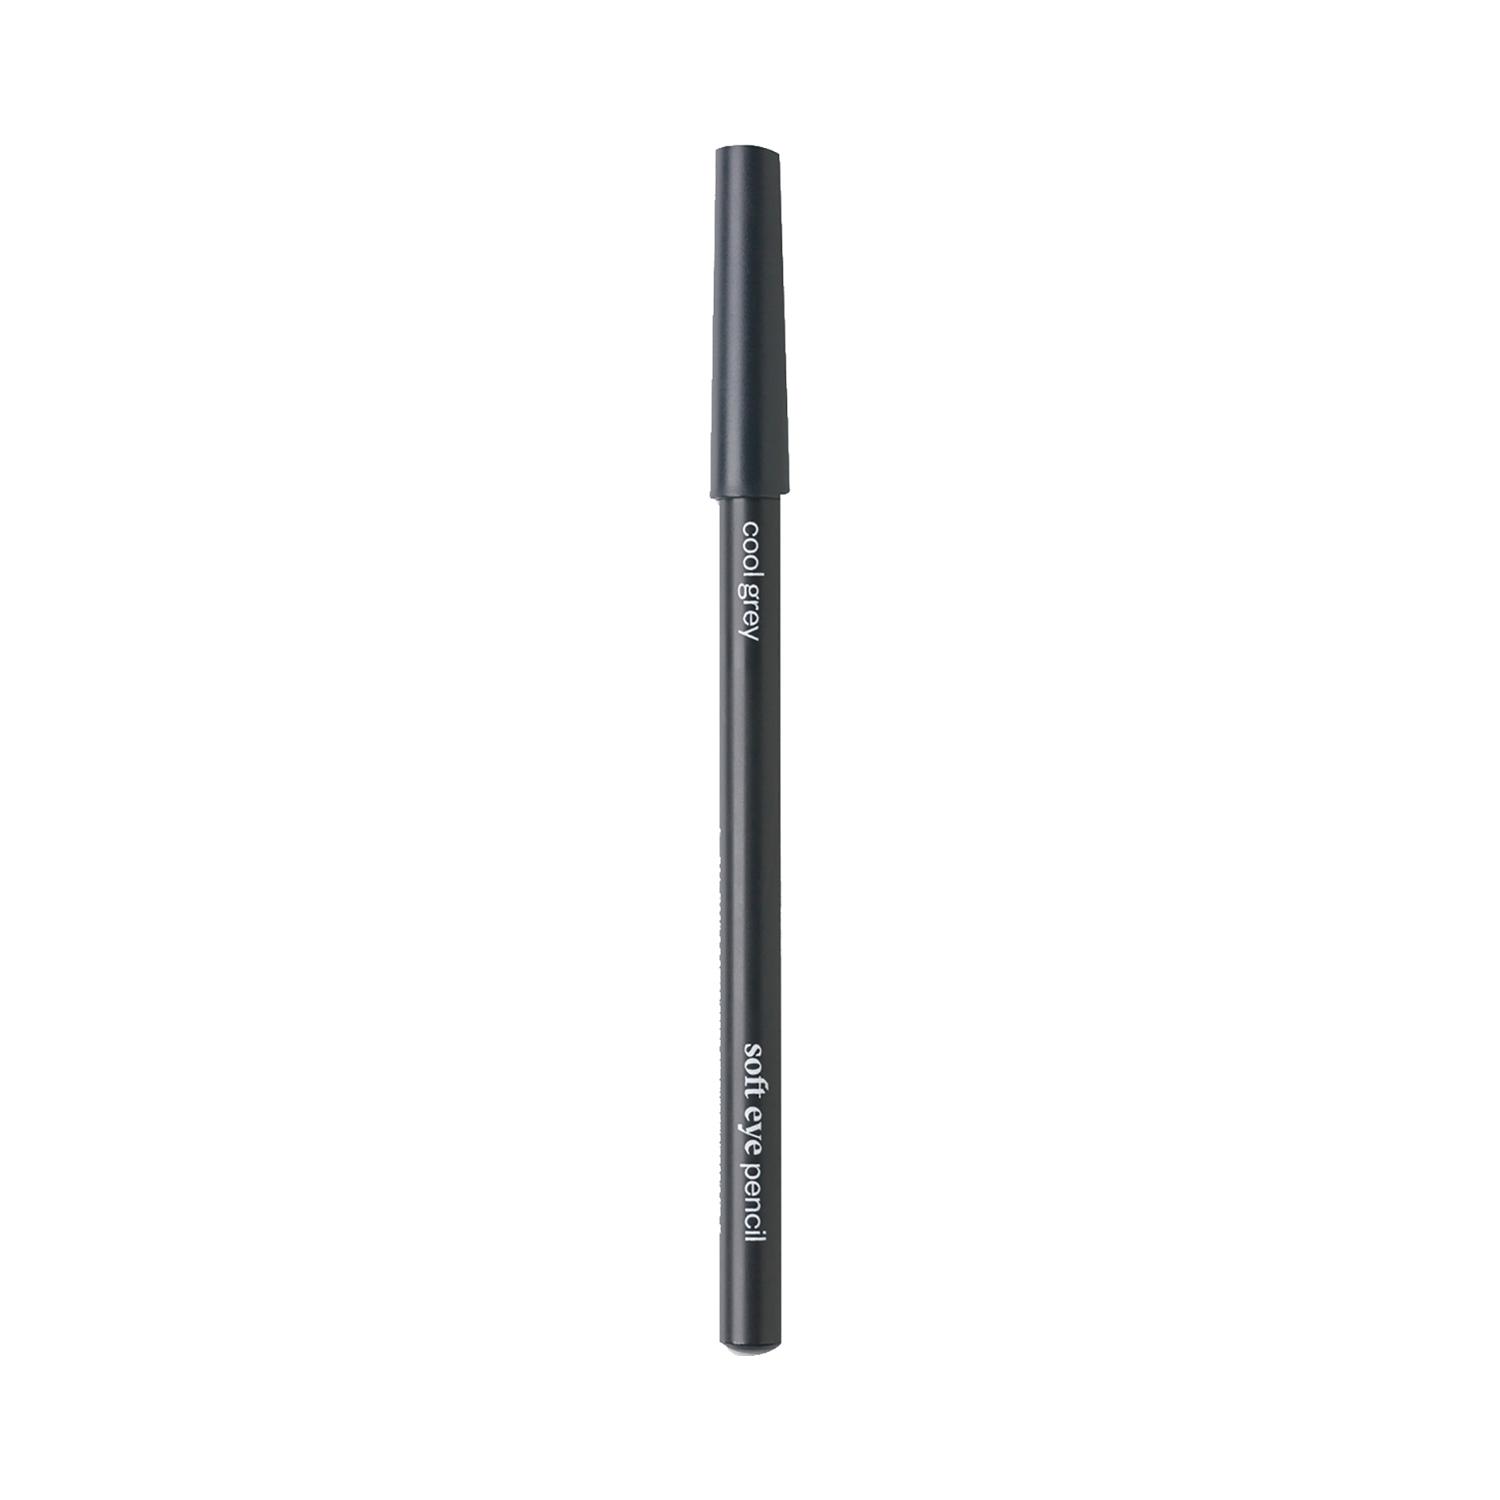 paese cosmetics soft eye pencil - 02 cool grey (1.5g)